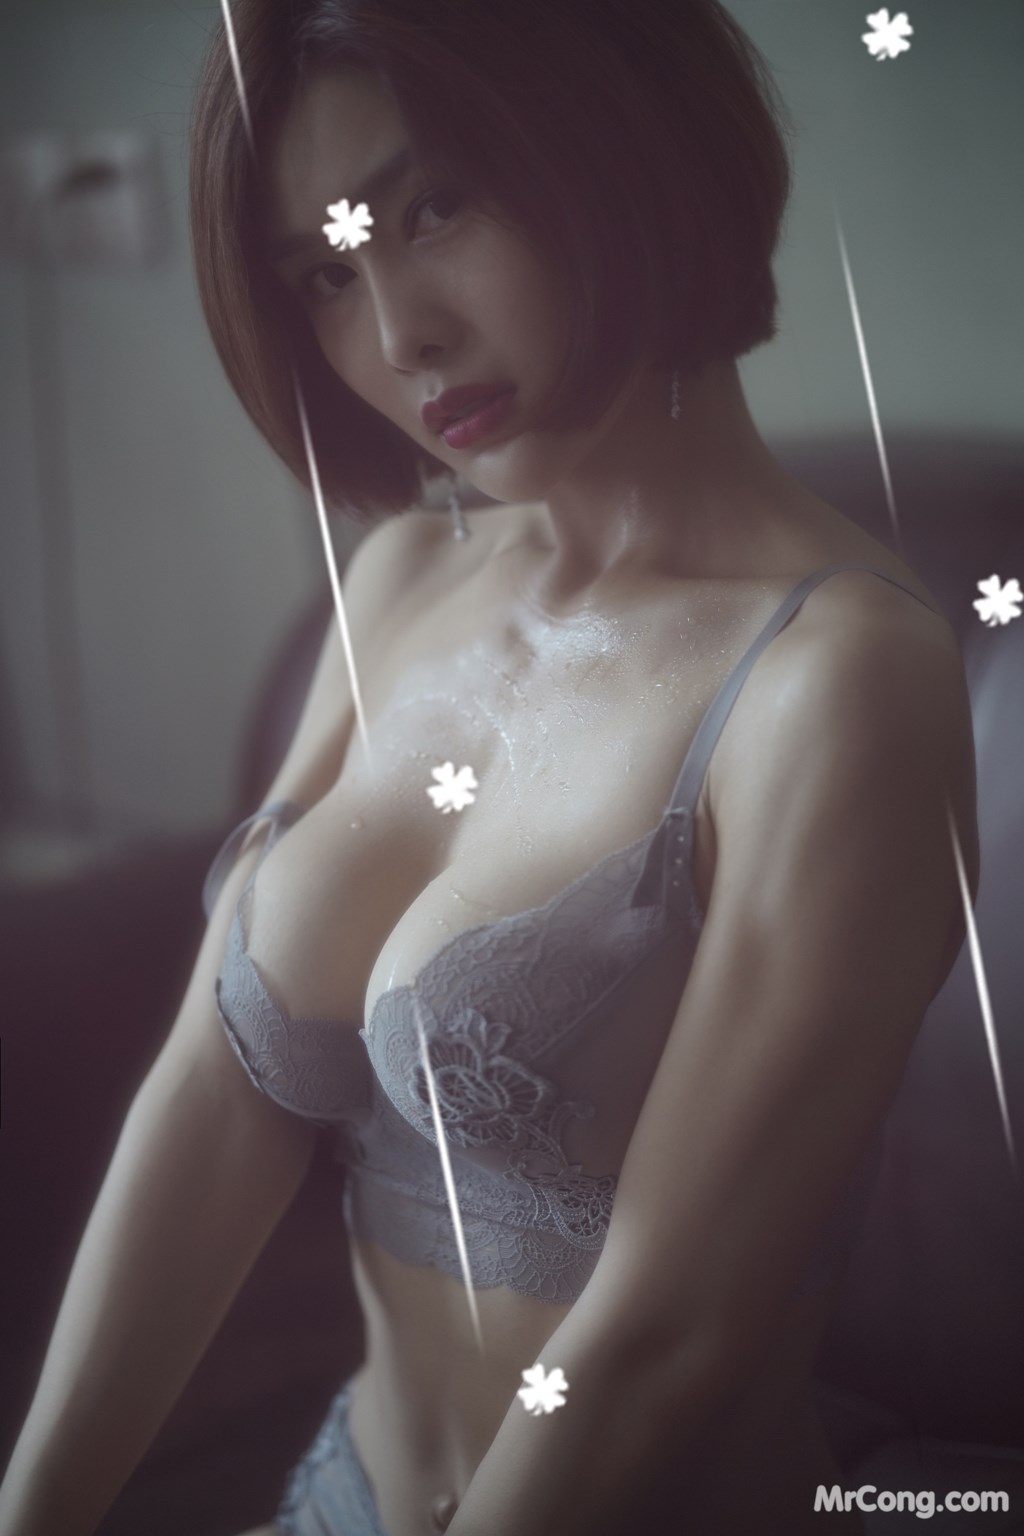 Yan Pan Pan (闫 盼盼) beauty poses super hot with underwear (58 photos)